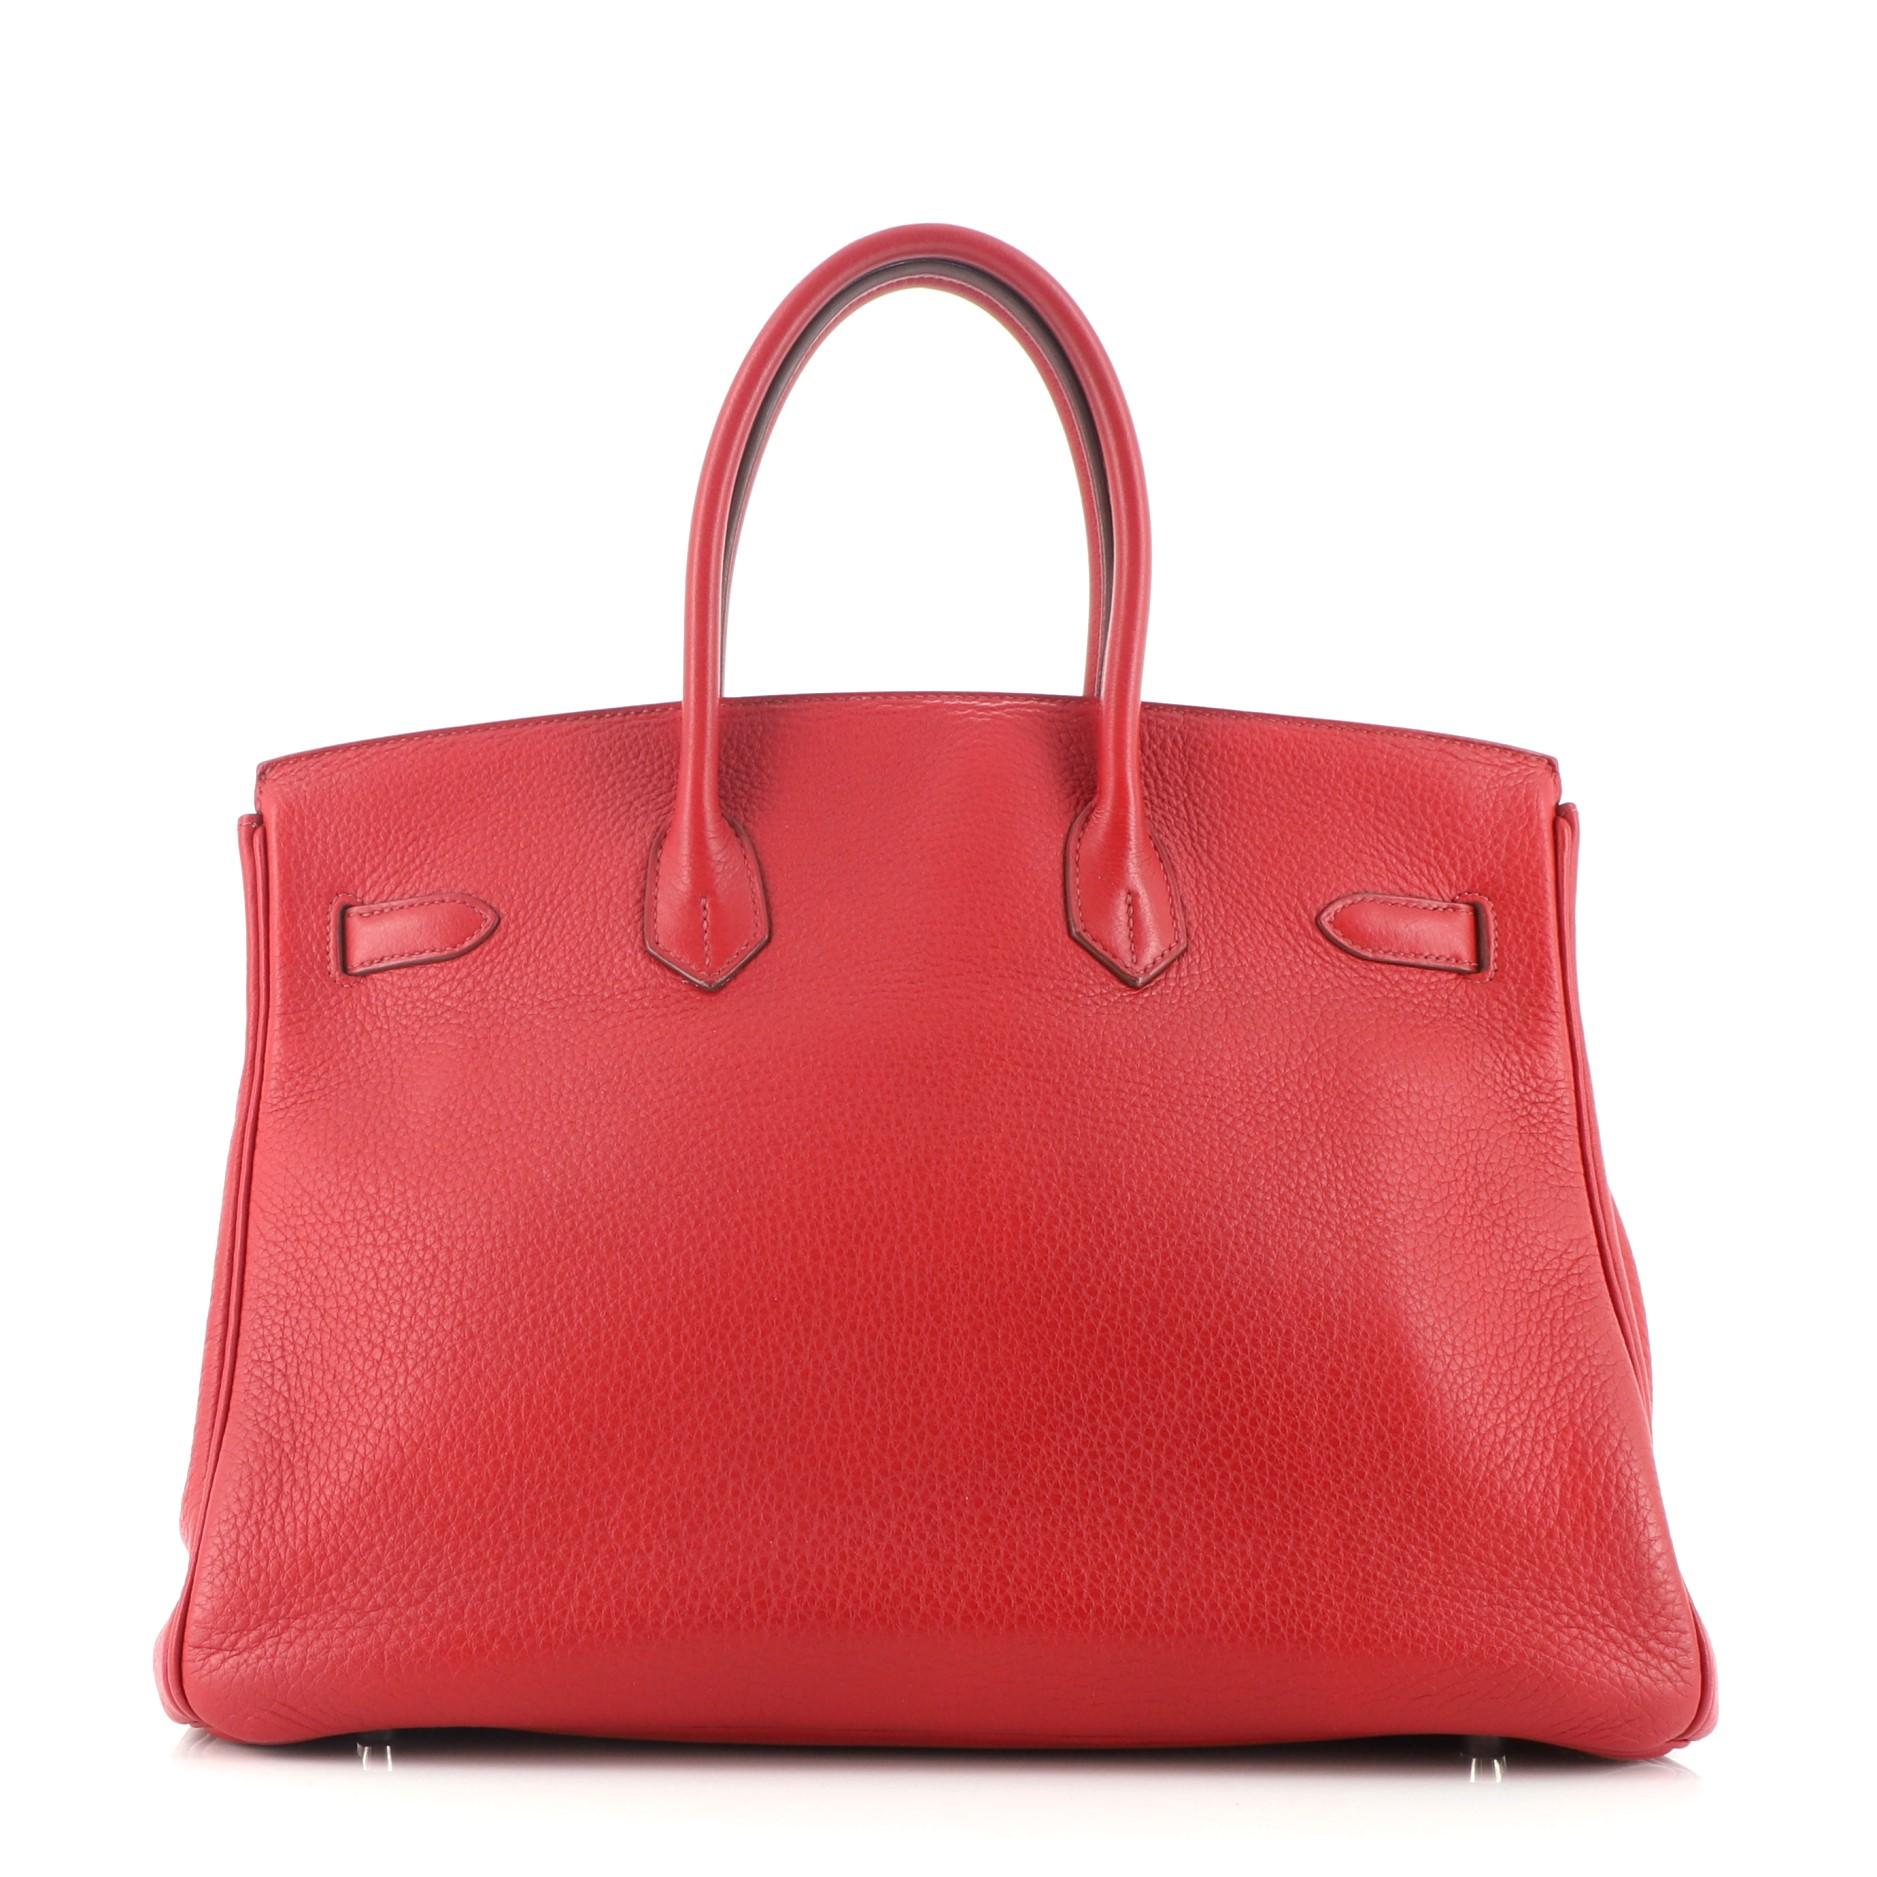 Red Hermes Birkin Handbag Rouge Garance Clemence with Palladium Hardware 35